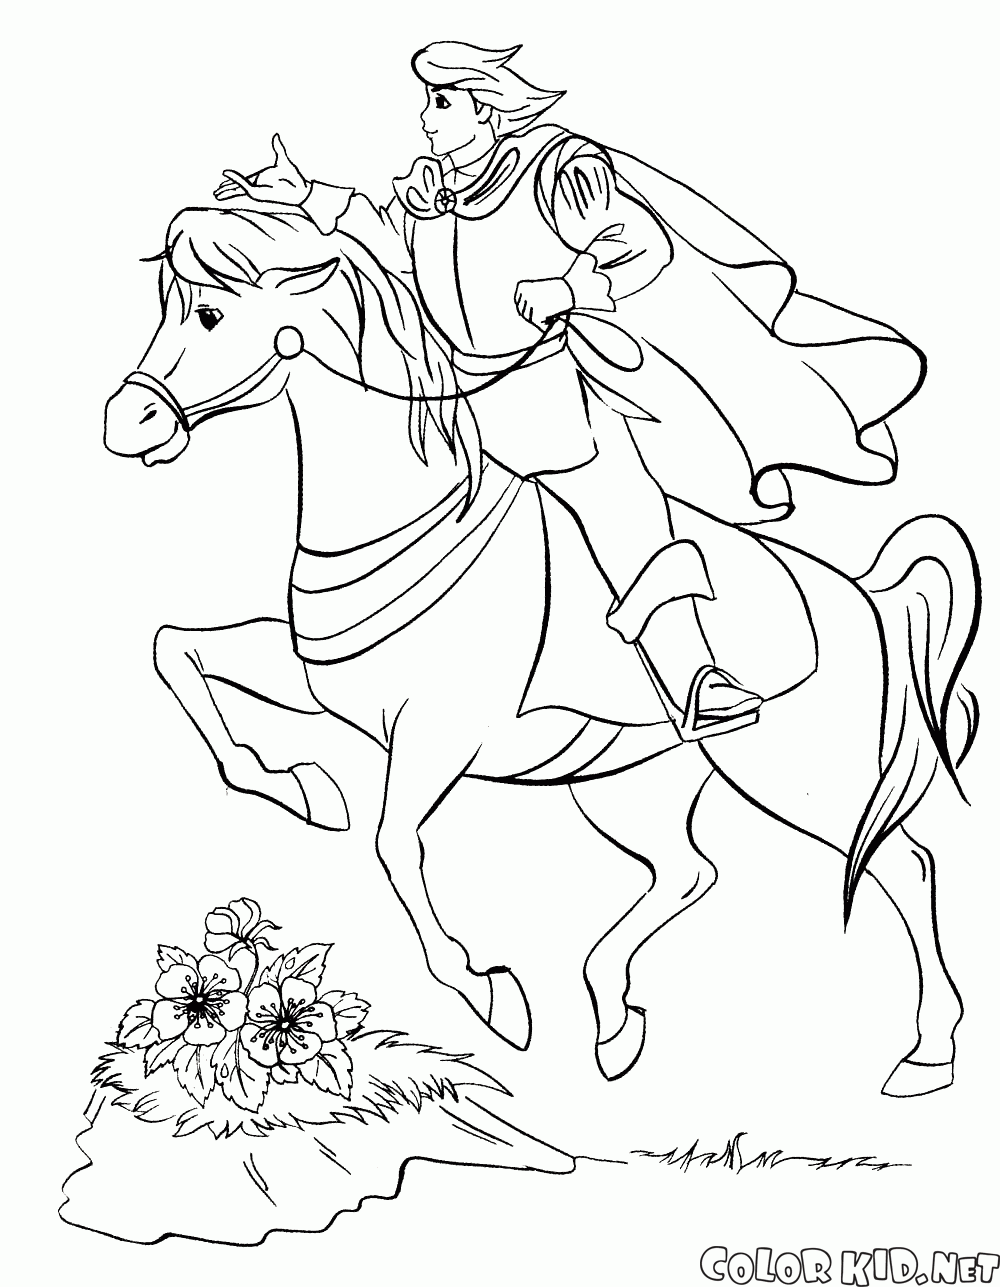 Prince on horseback